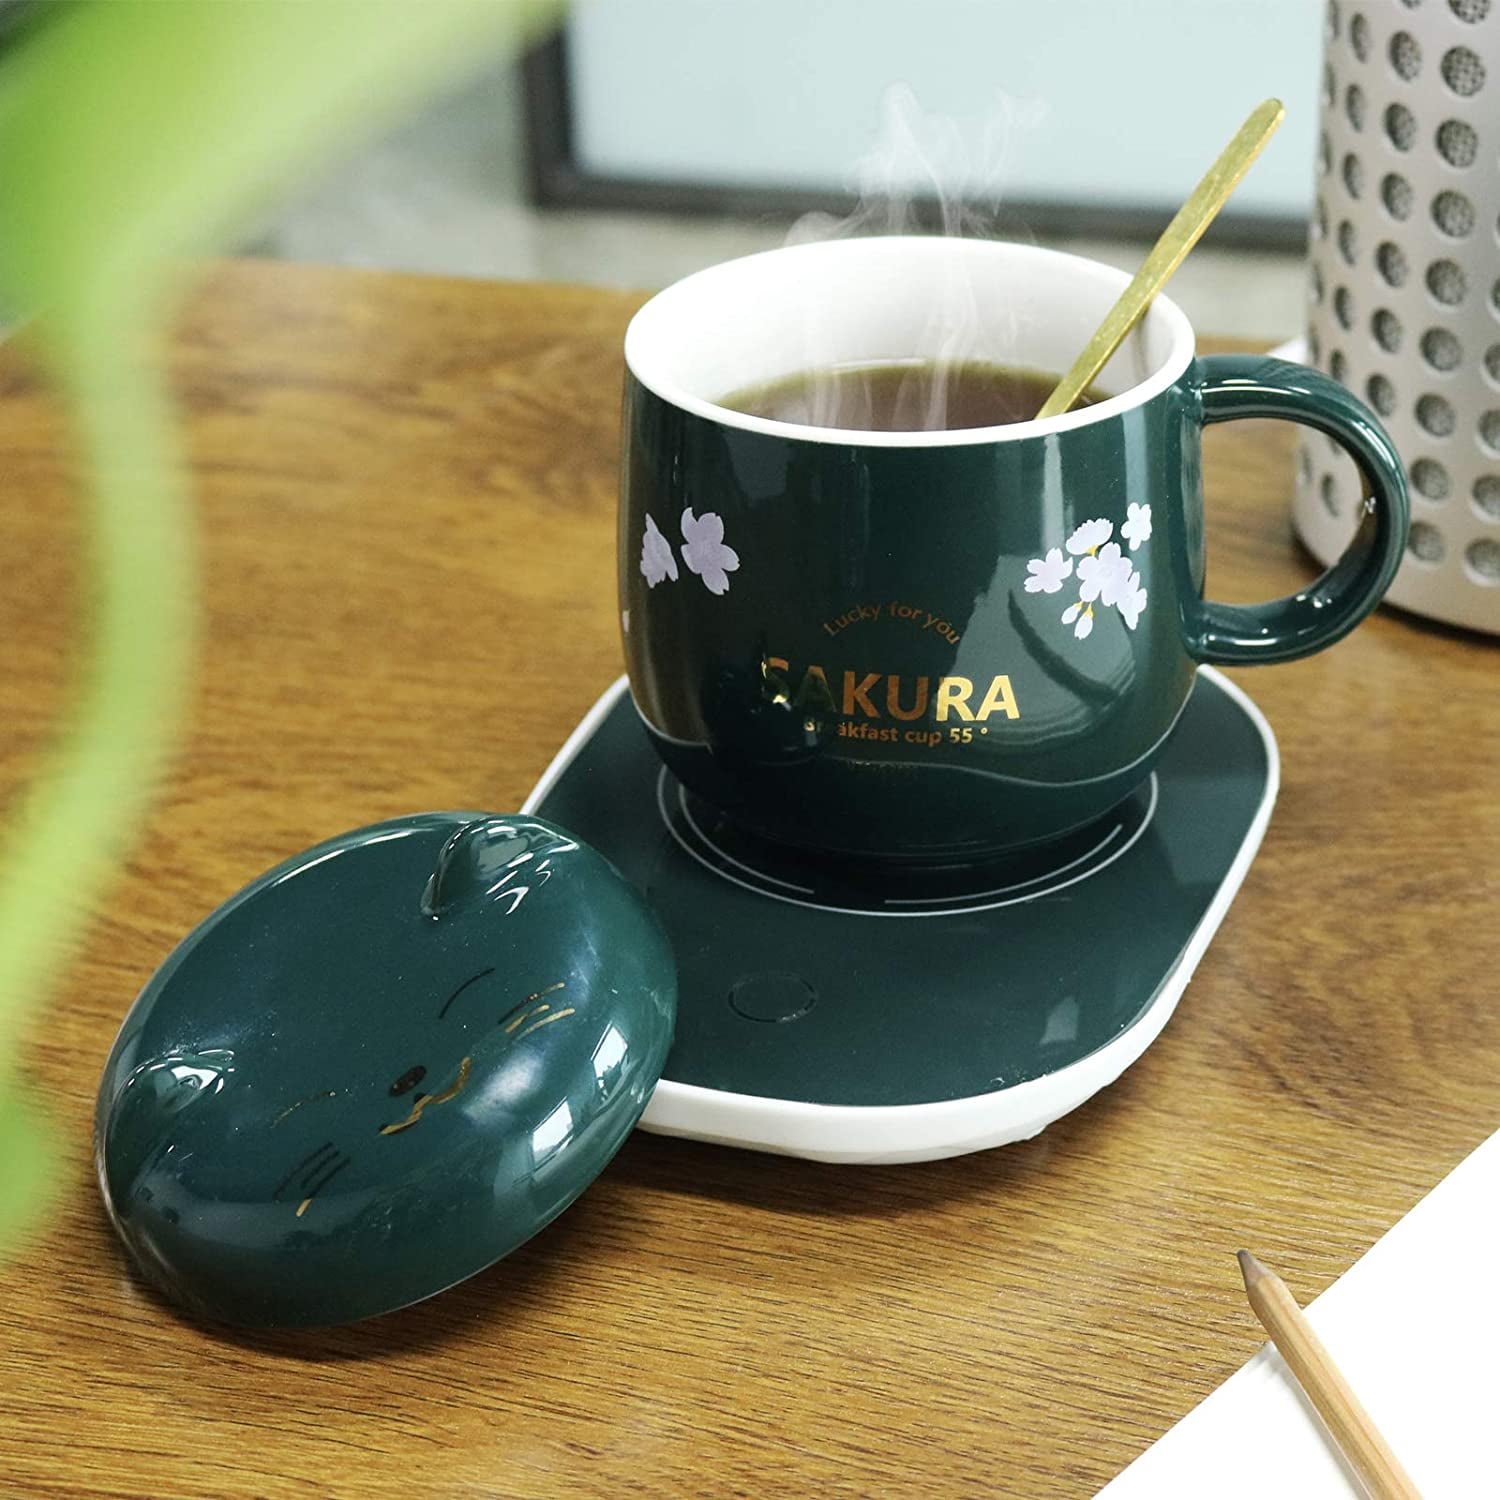 The Jül: Heated Smart Mug for Coffee & Tea by Power Practical